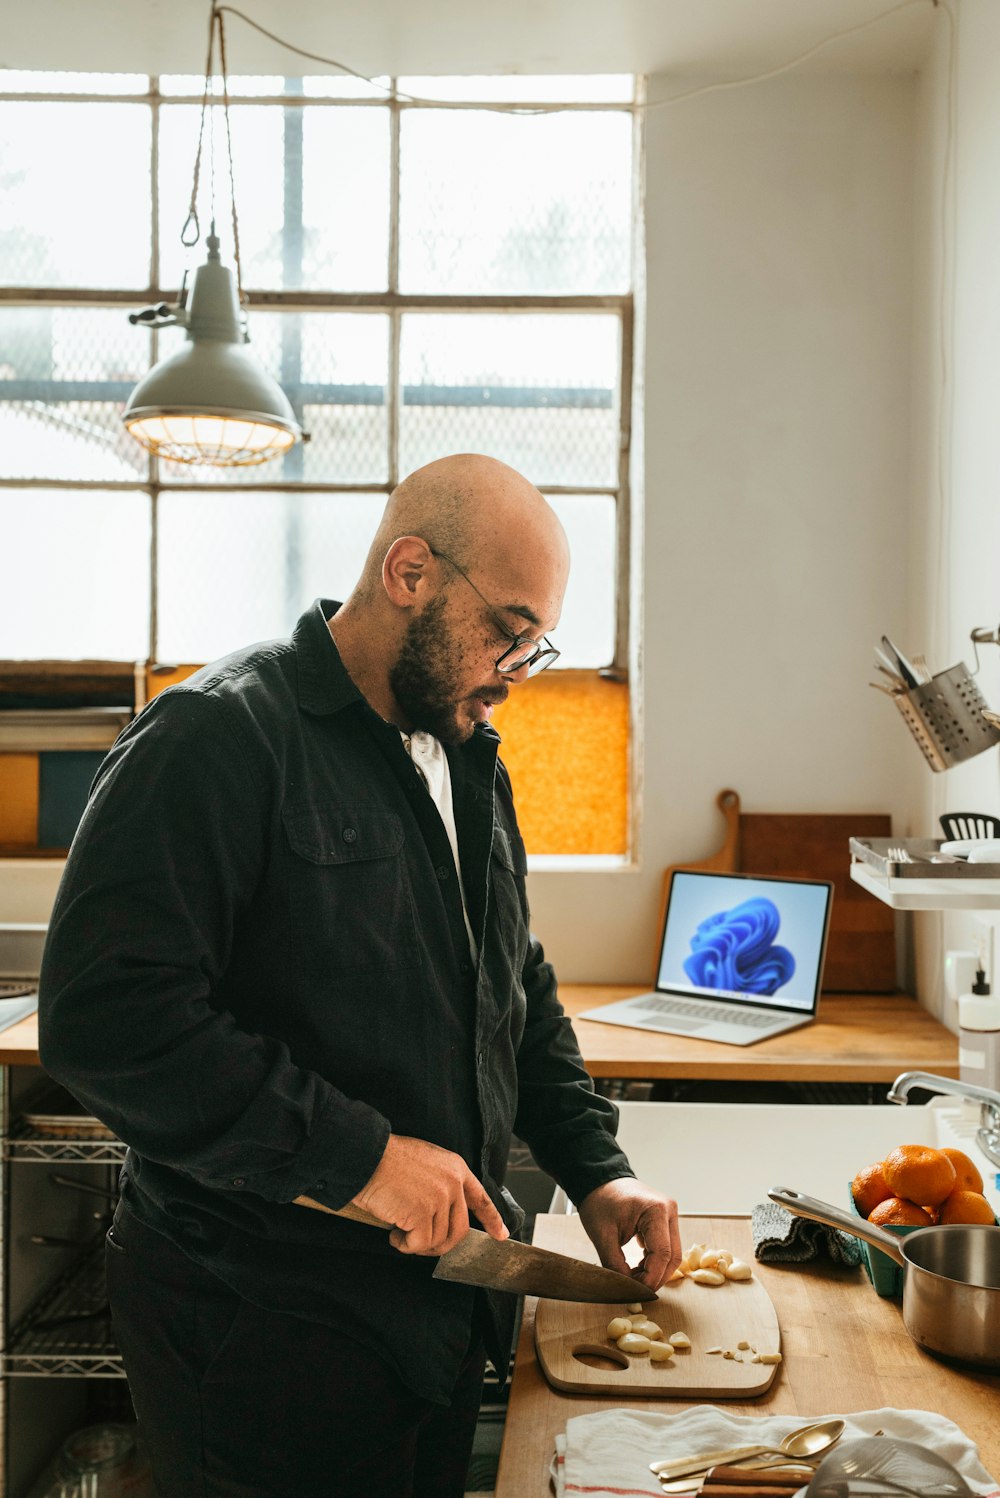 a man cutting food on a cutting board in a kitchen